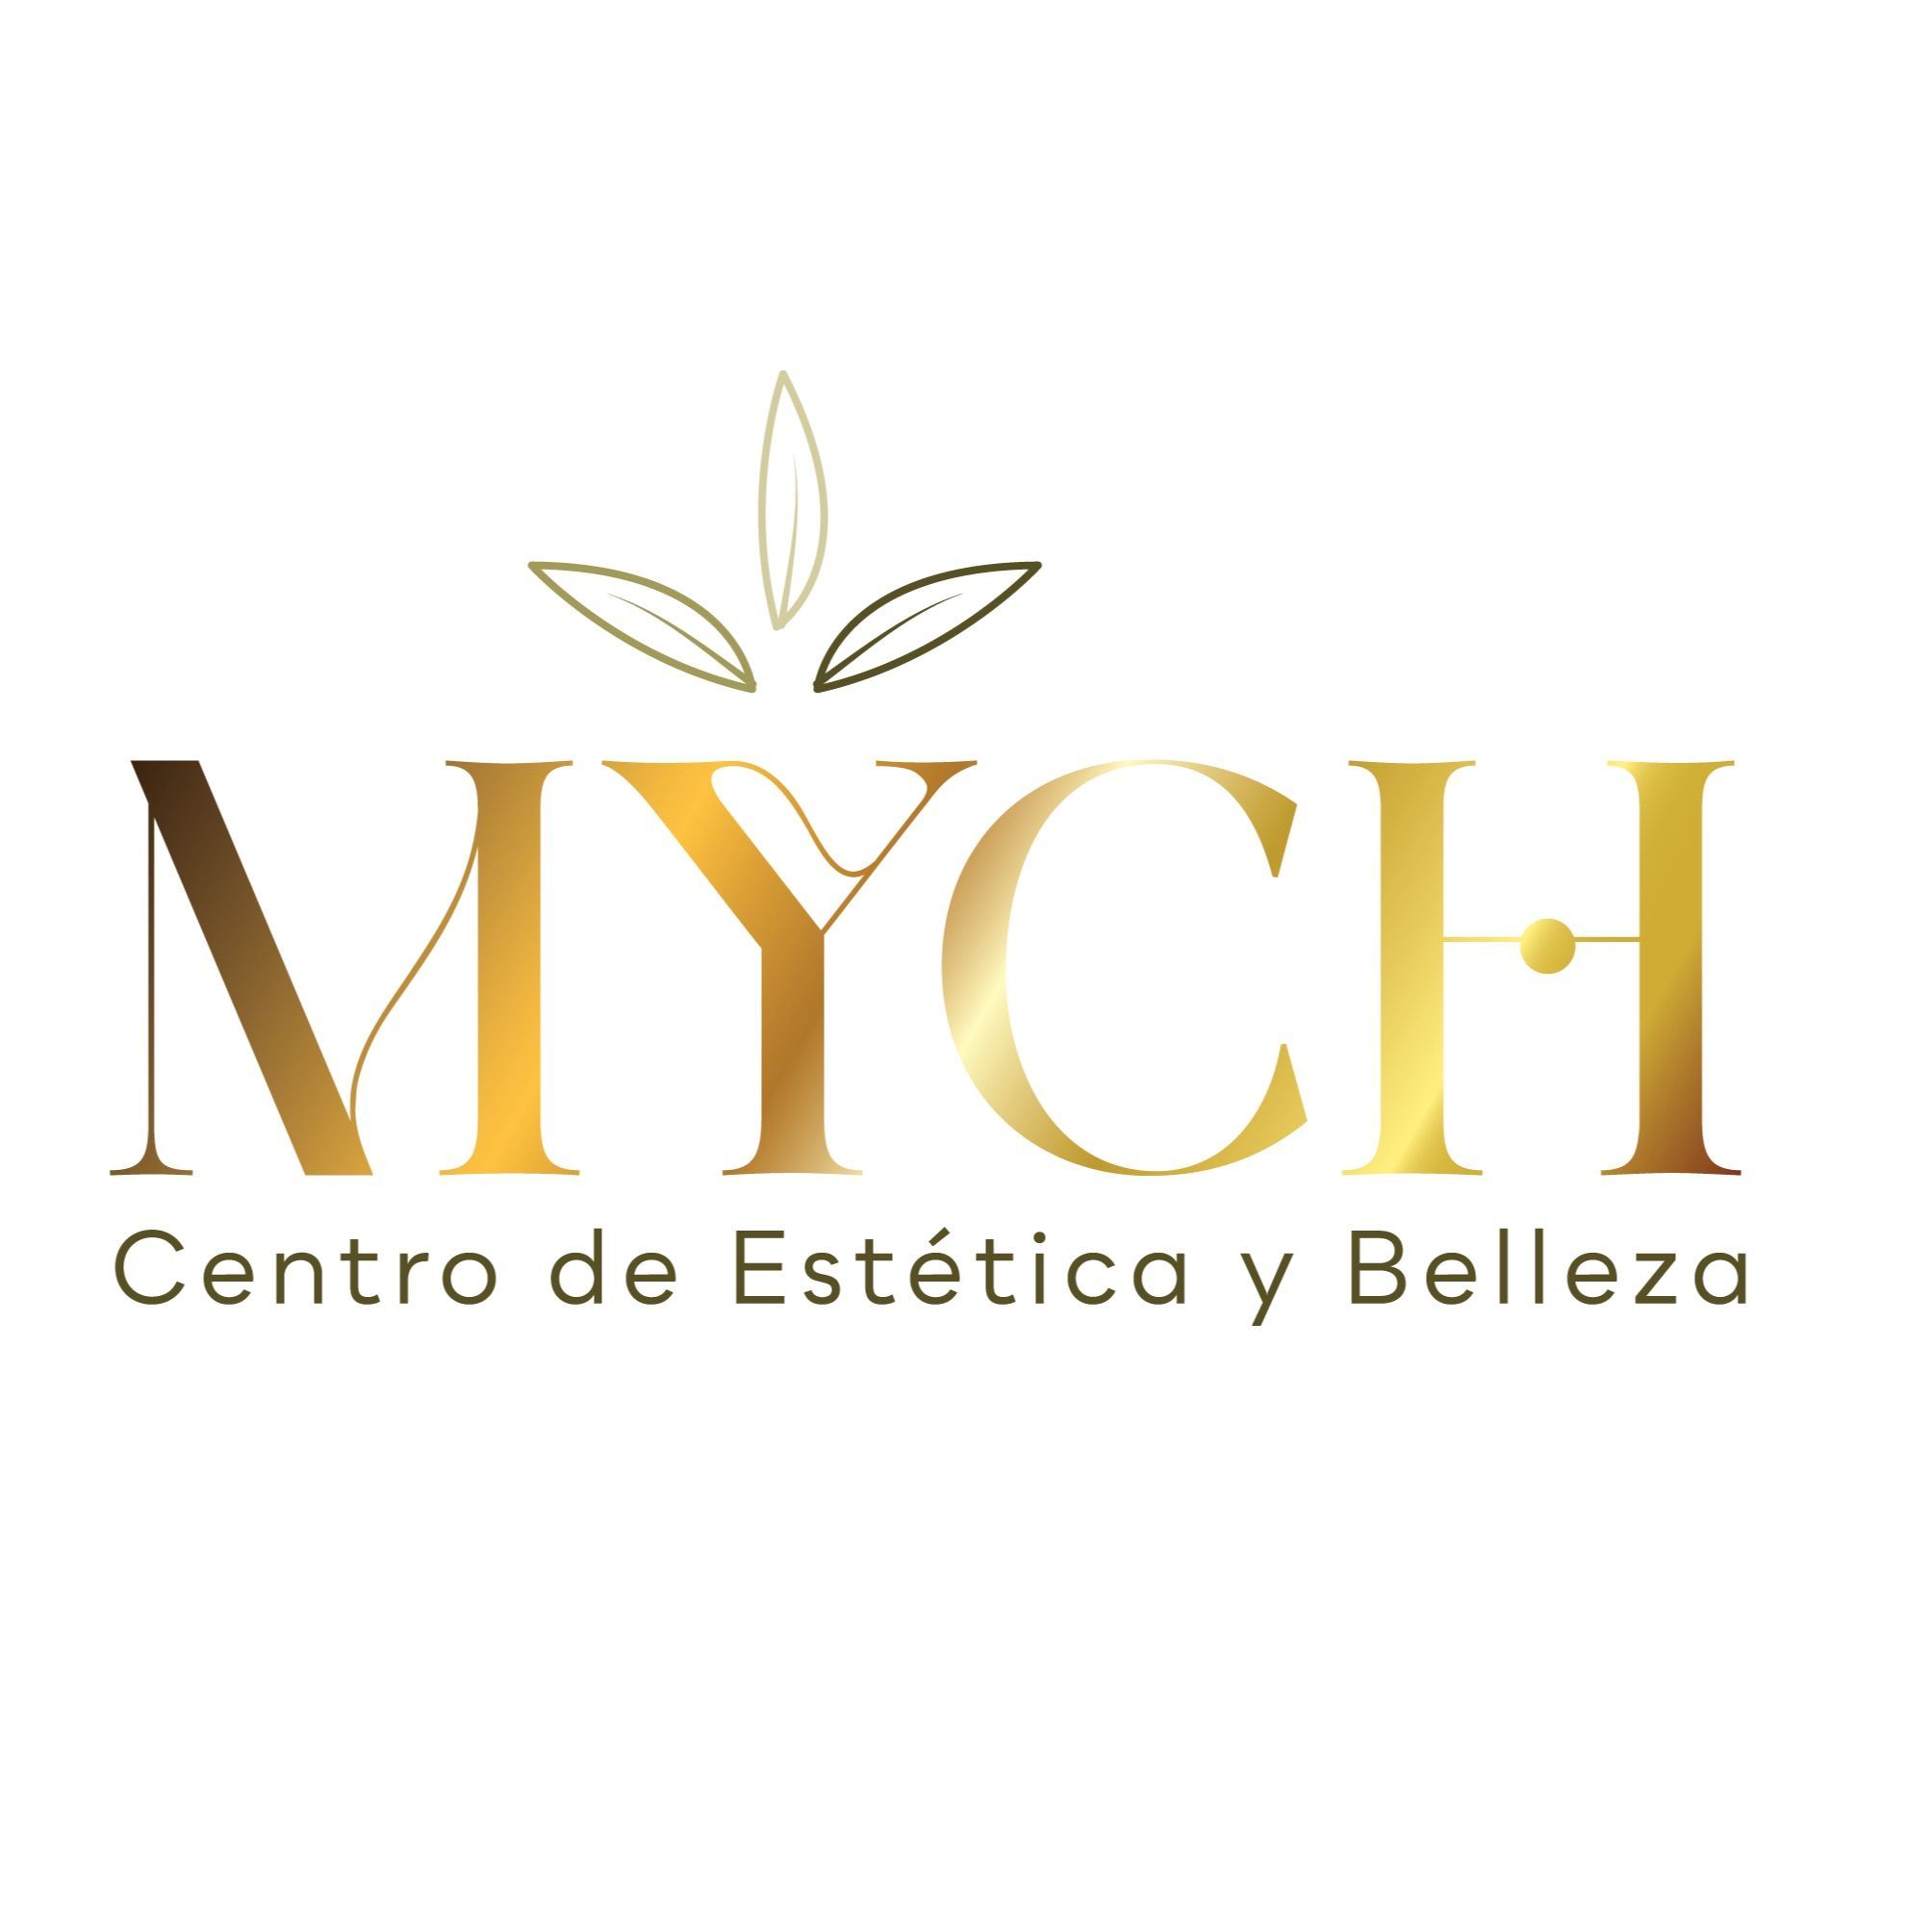 MYCH.ESTETICA, Plaza del Patritismo 4, CC holywood local 13 semisotano, 38002, Santa Cruz de Tenerife